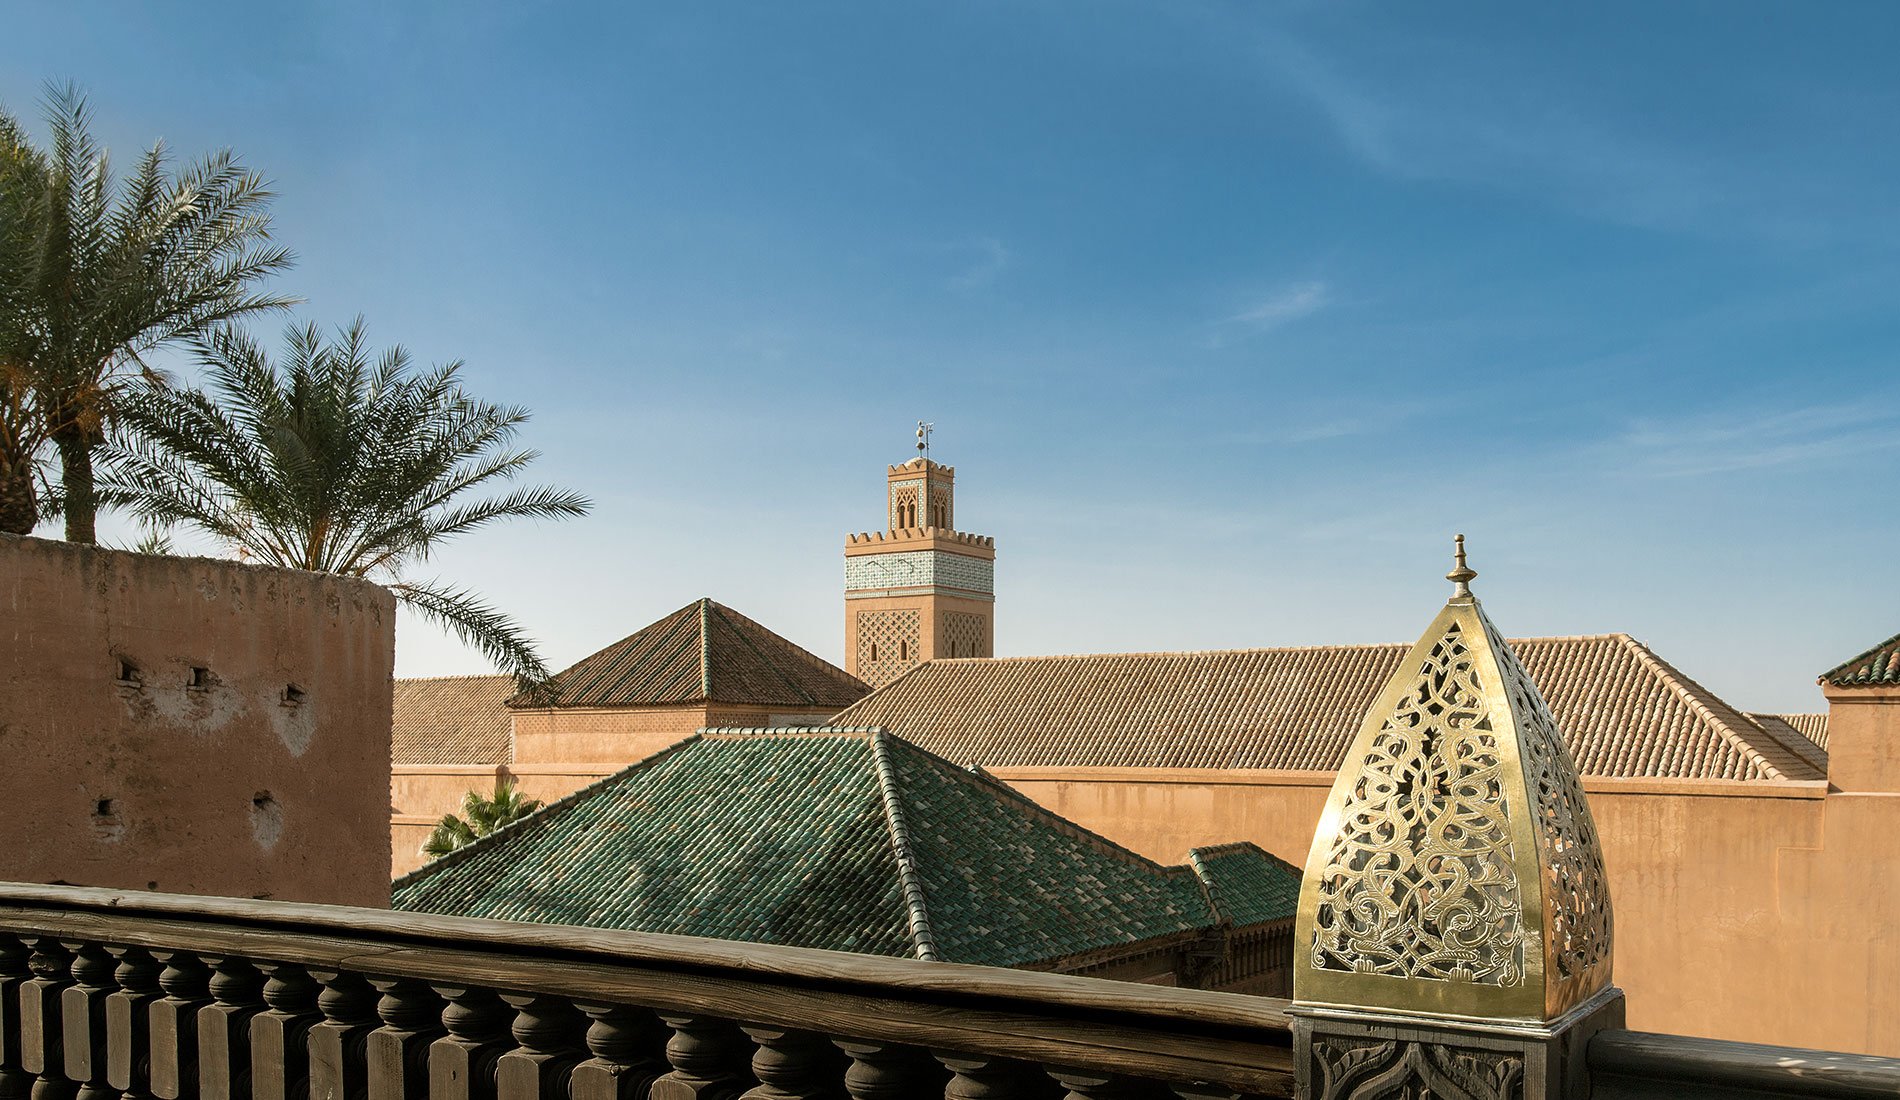 Luxury Hotel La Sultana Marrakesh 5 stars Africa Marocco Marrakesh hotel view